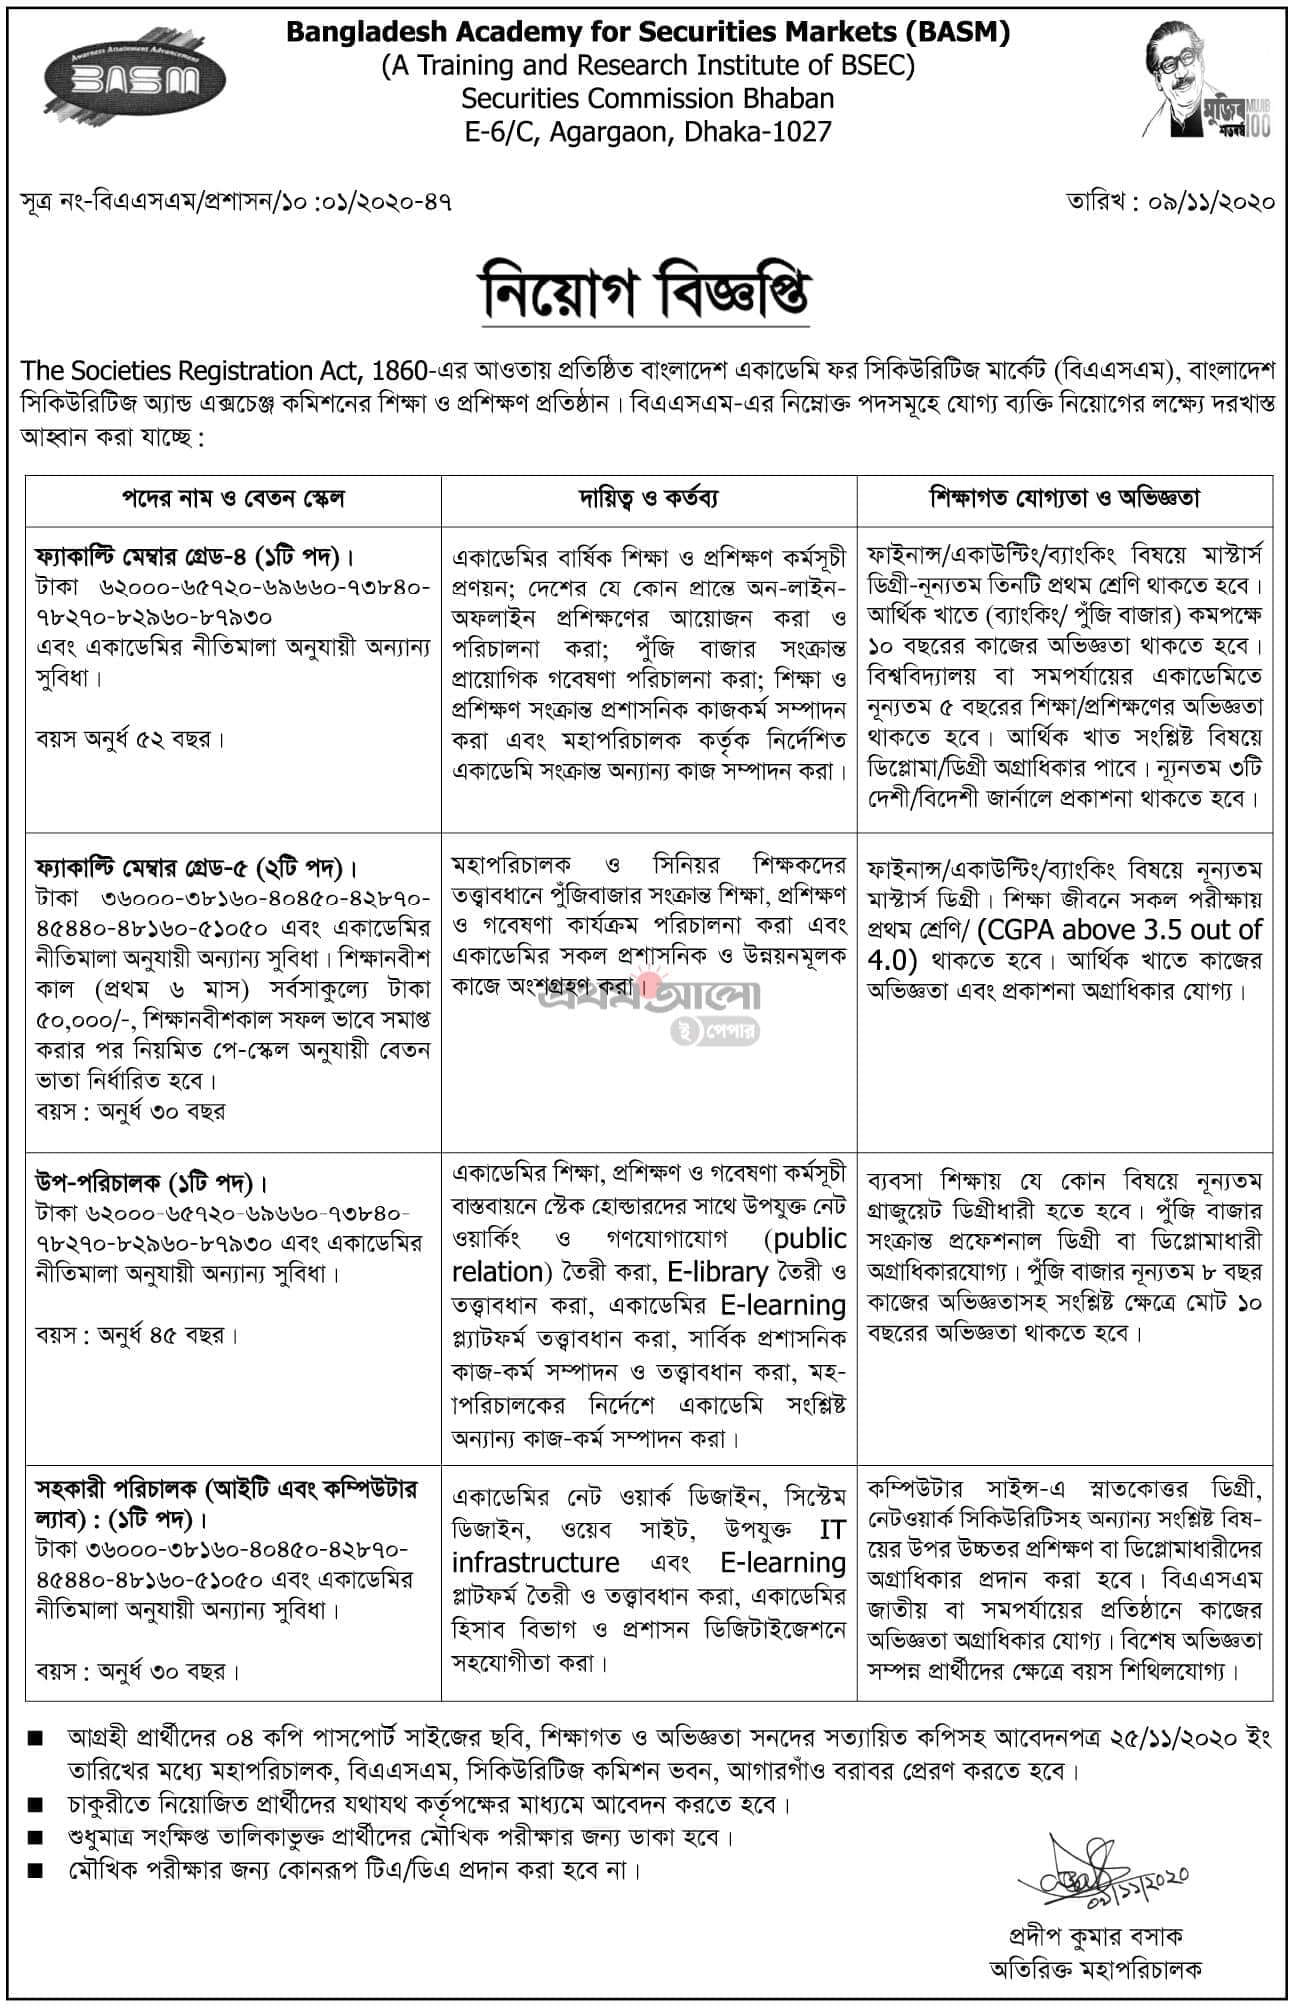 Teaching Job in Bangladesh Academy for Securities Market (BASM)